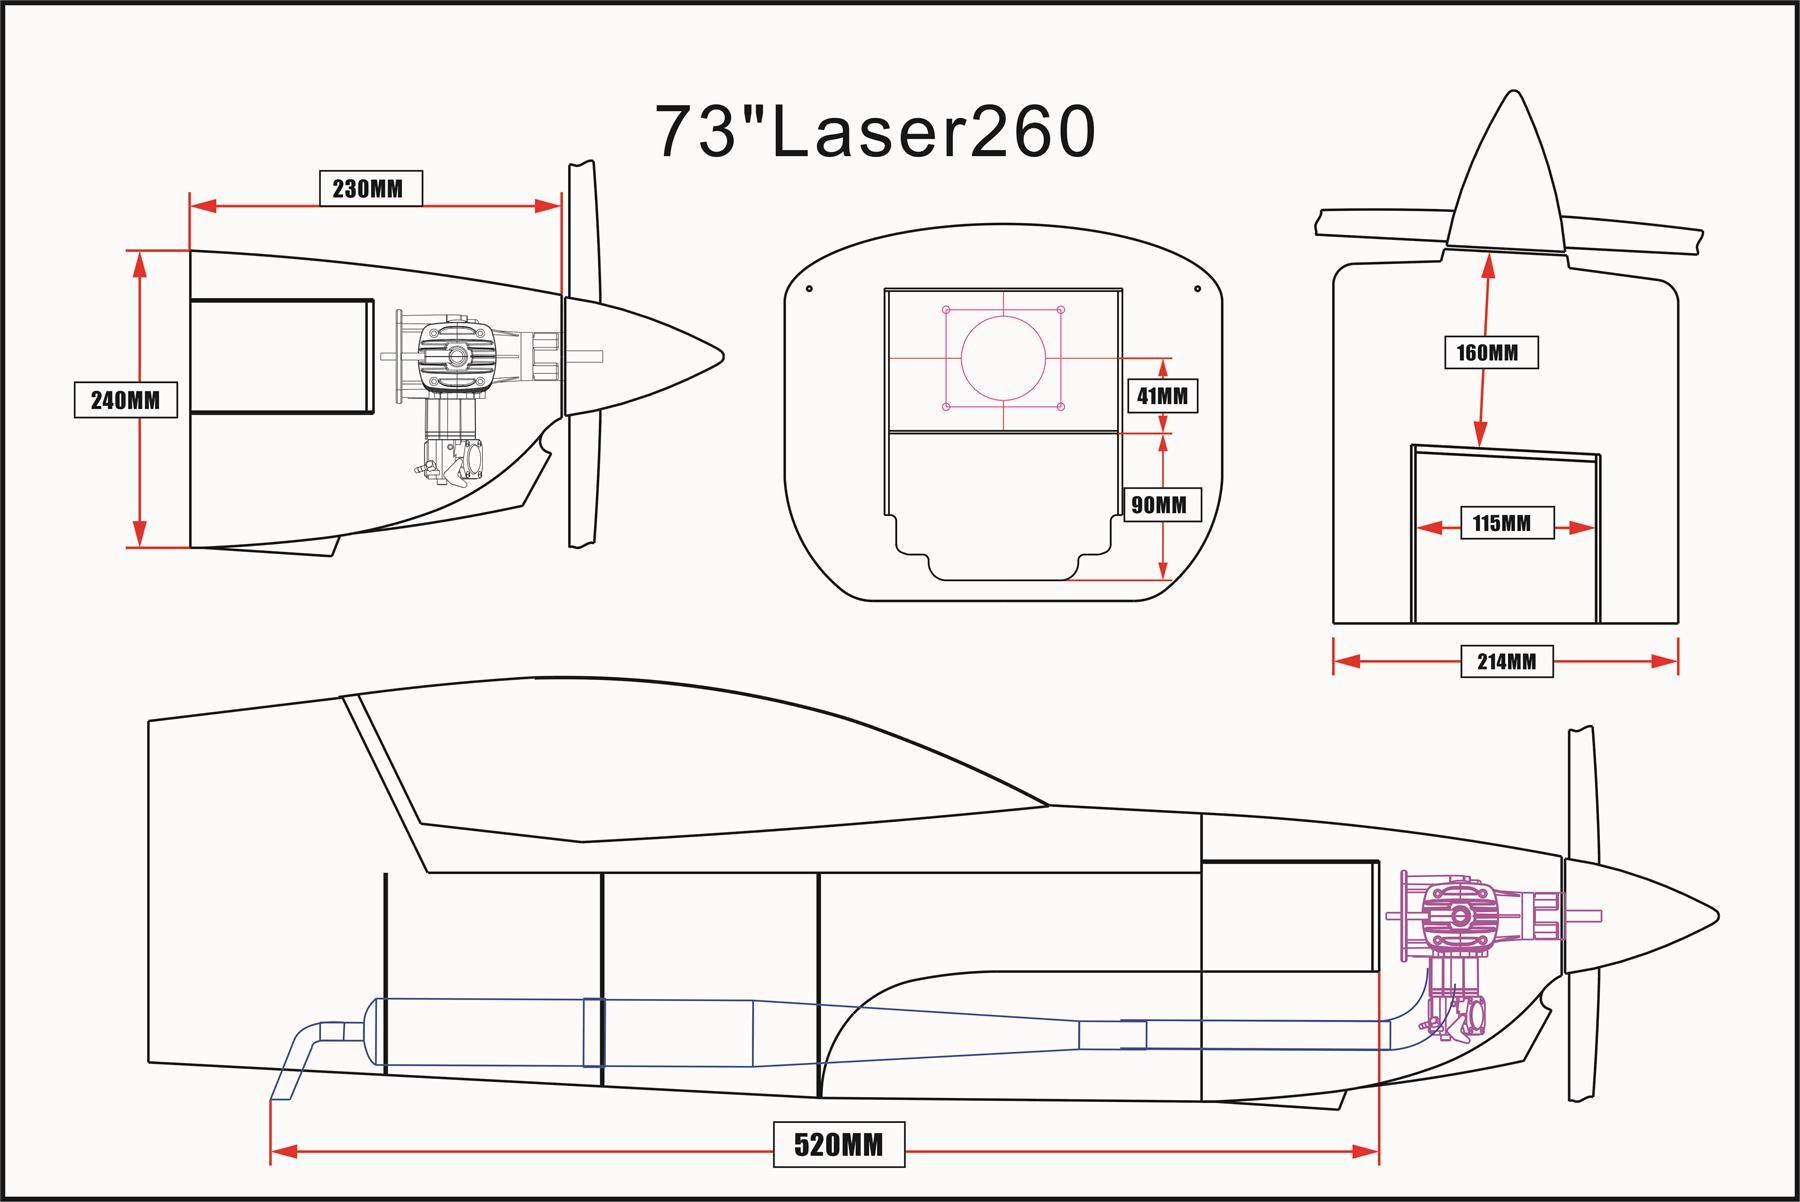 Laser 260 - 73 - V3 - blau/grün/weiß